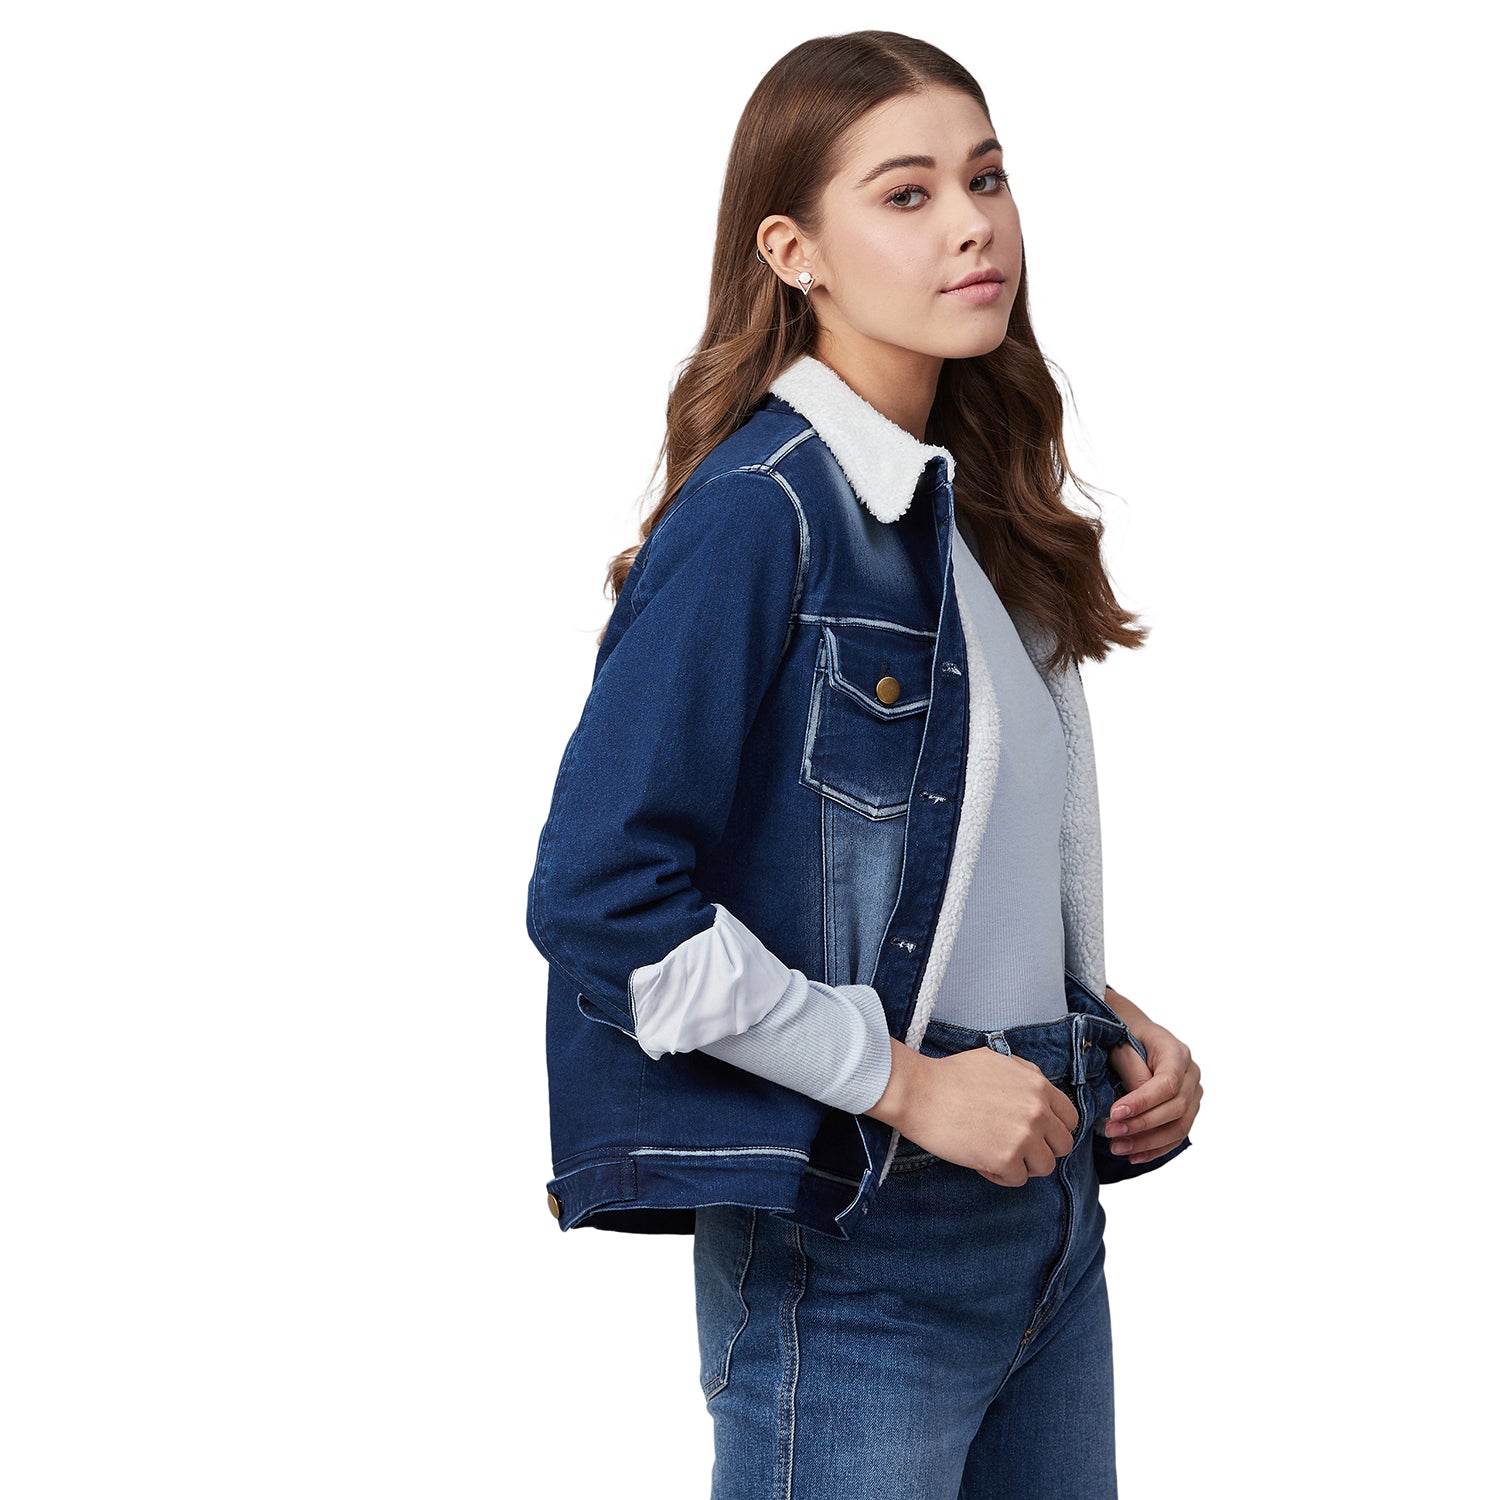 Women's Denim Jacket with Soft Warm Faux Fur Lining inside - StyleStone